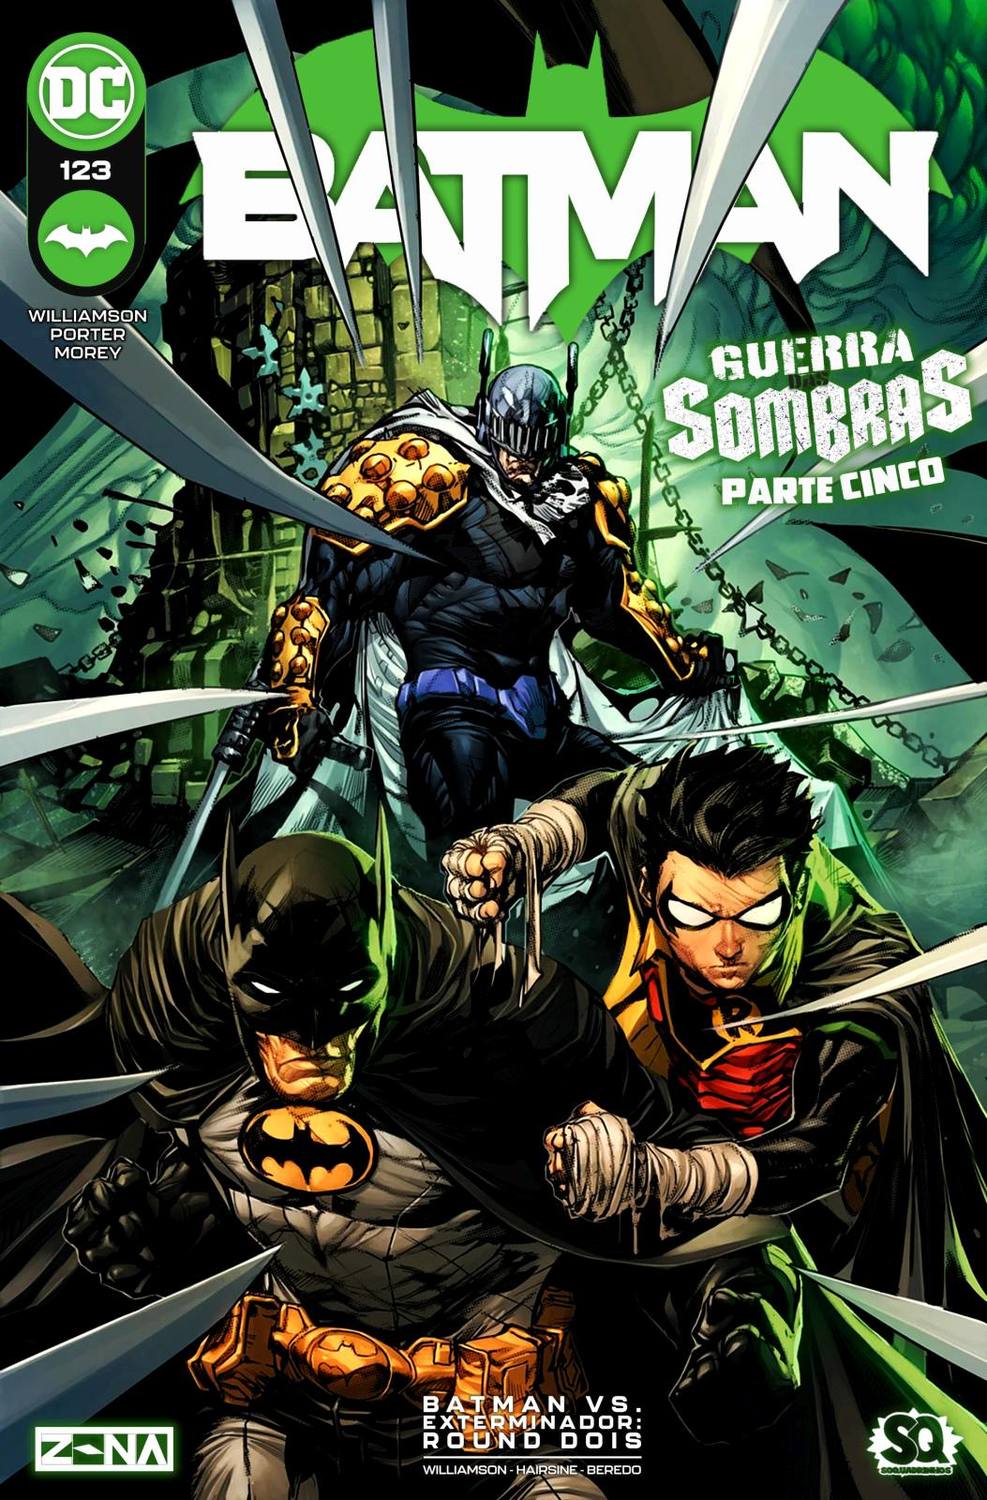 Batman Brasil - Batman na HQ Trindade - DC Comics Rebirth Batman Brasil # Batman #DarkKnight #DC #DCComics #Wallpaper #HQ #HQs #Comic #Comics  #Quadrinho #Quadrinhos #Trindade #Trinity #DCRebirth #Rebirth #Renascimento  #DCRenascimento